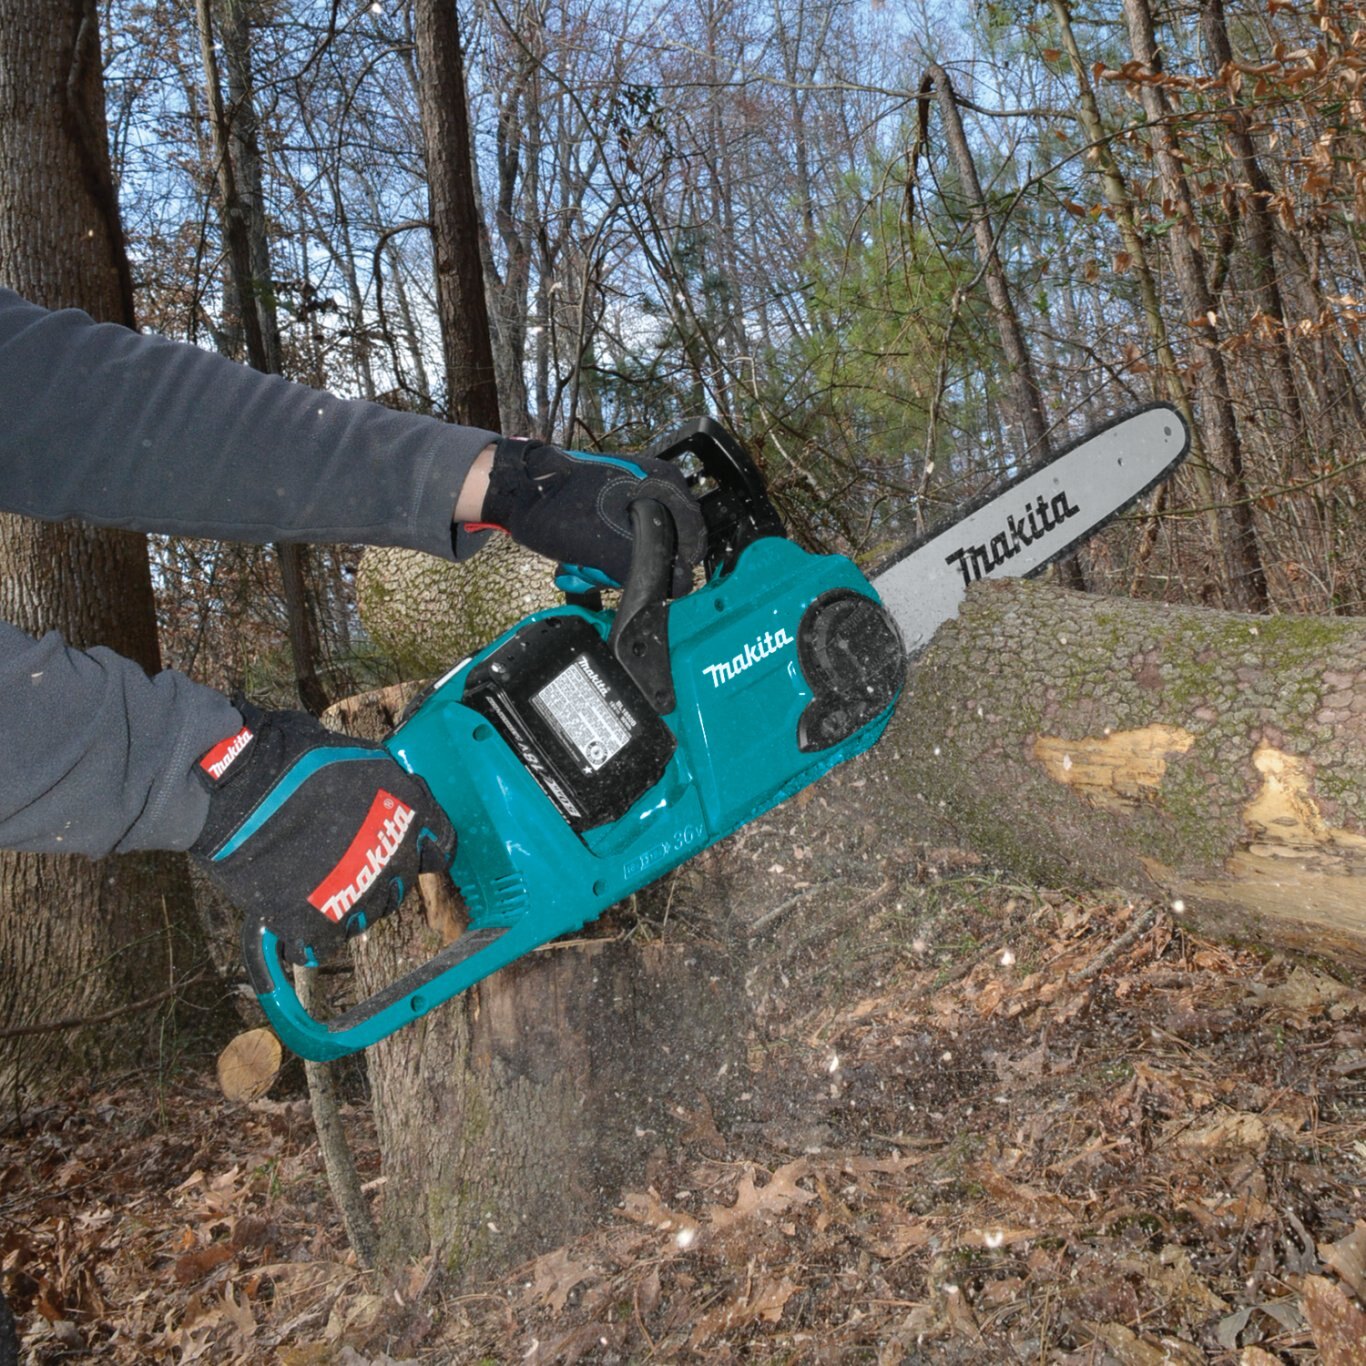 Makita 36V (18V X2) LXT® Brushless 14 Chain Saw Kit (5.0Ah)